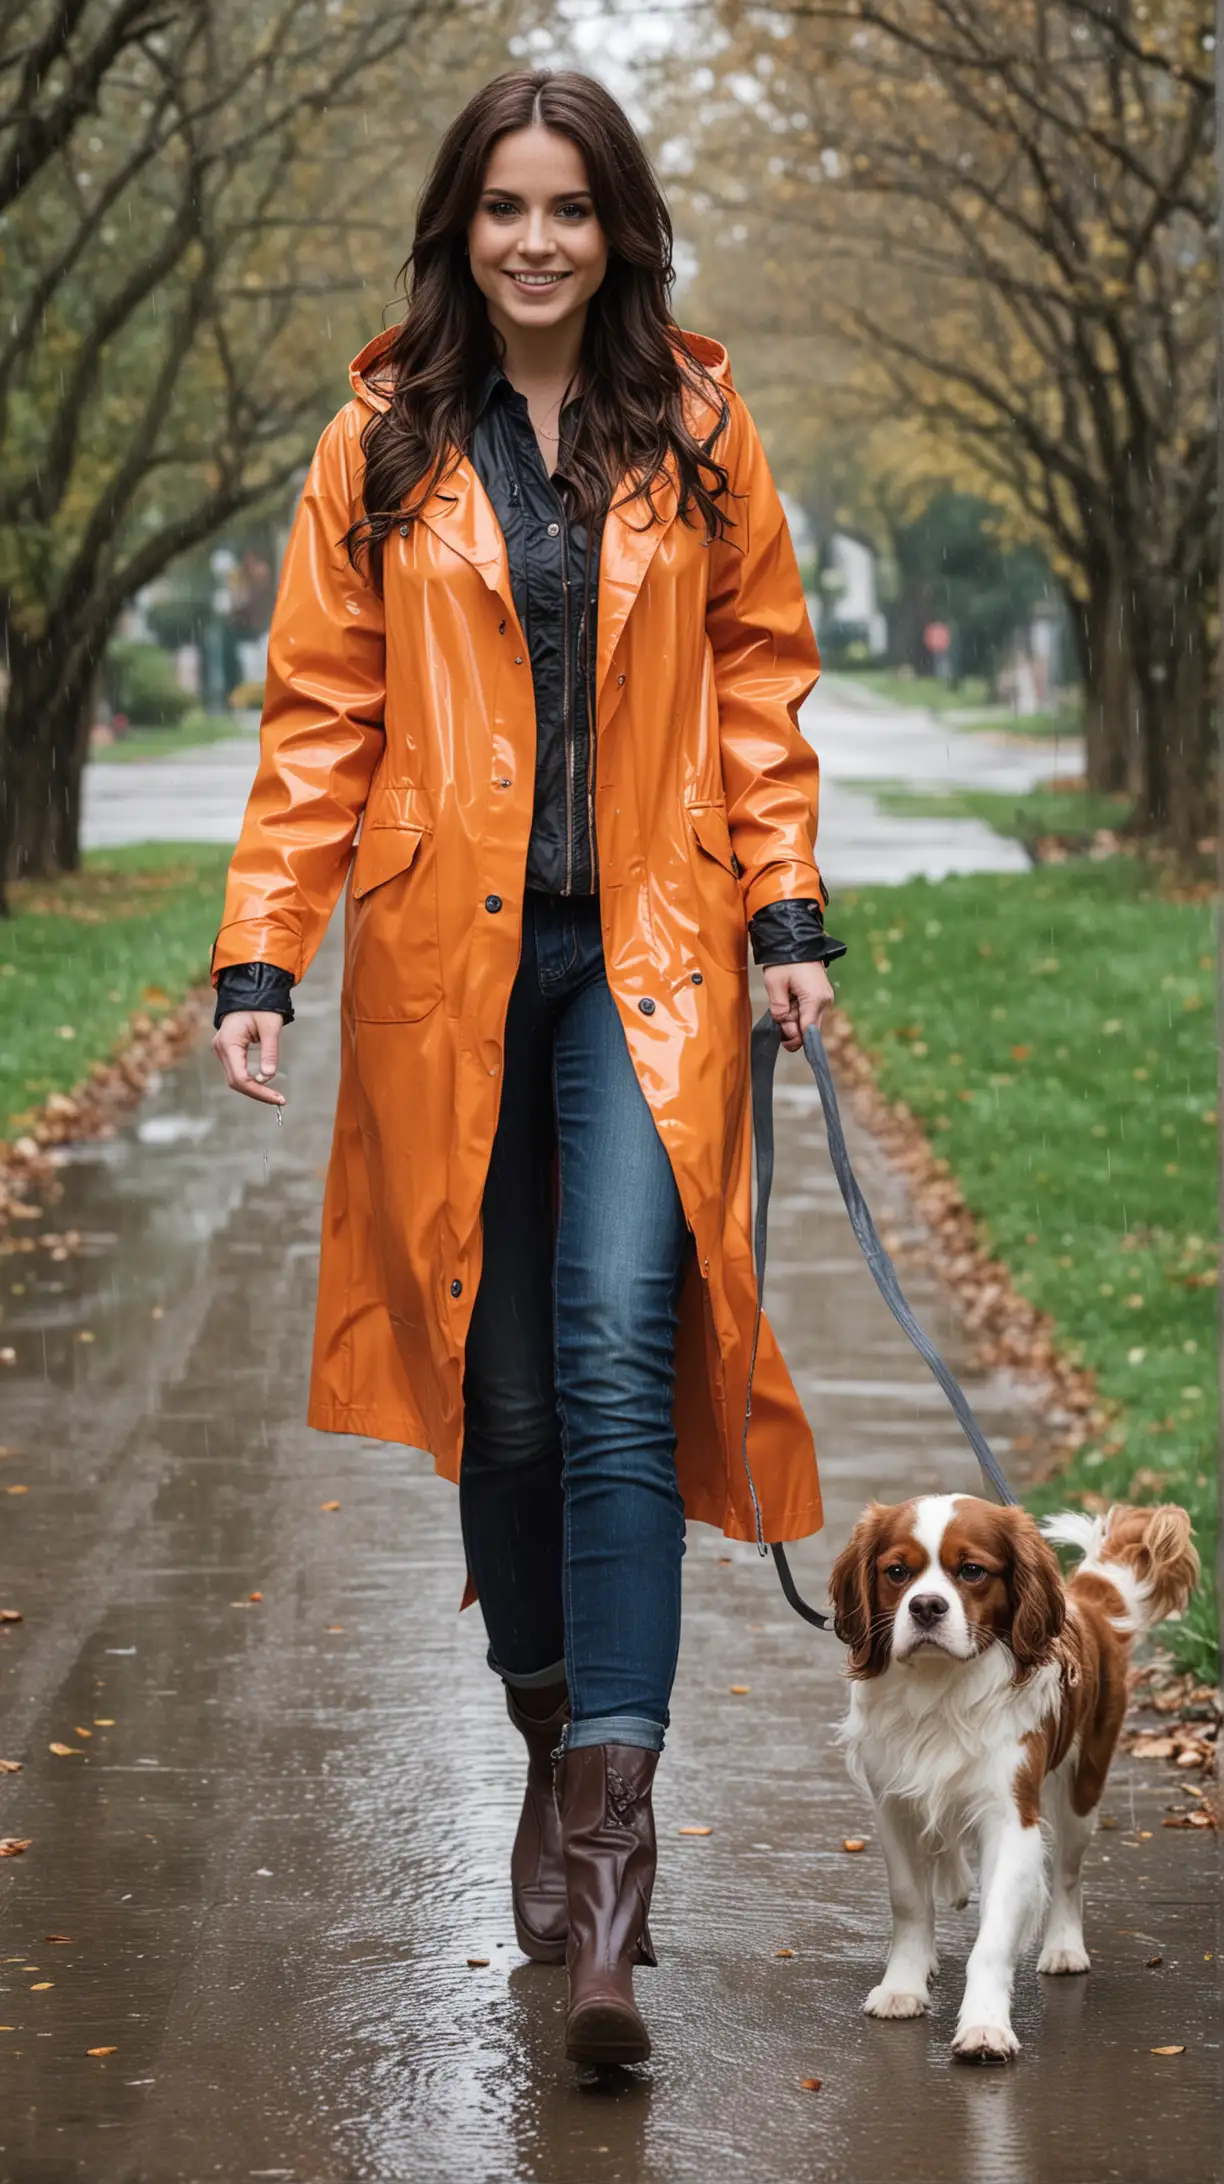 25-year-old Jordan Claire Robbins with long, dark, brunette hair wearing Raincoat while walking a Cavalier King Charles Spaniel